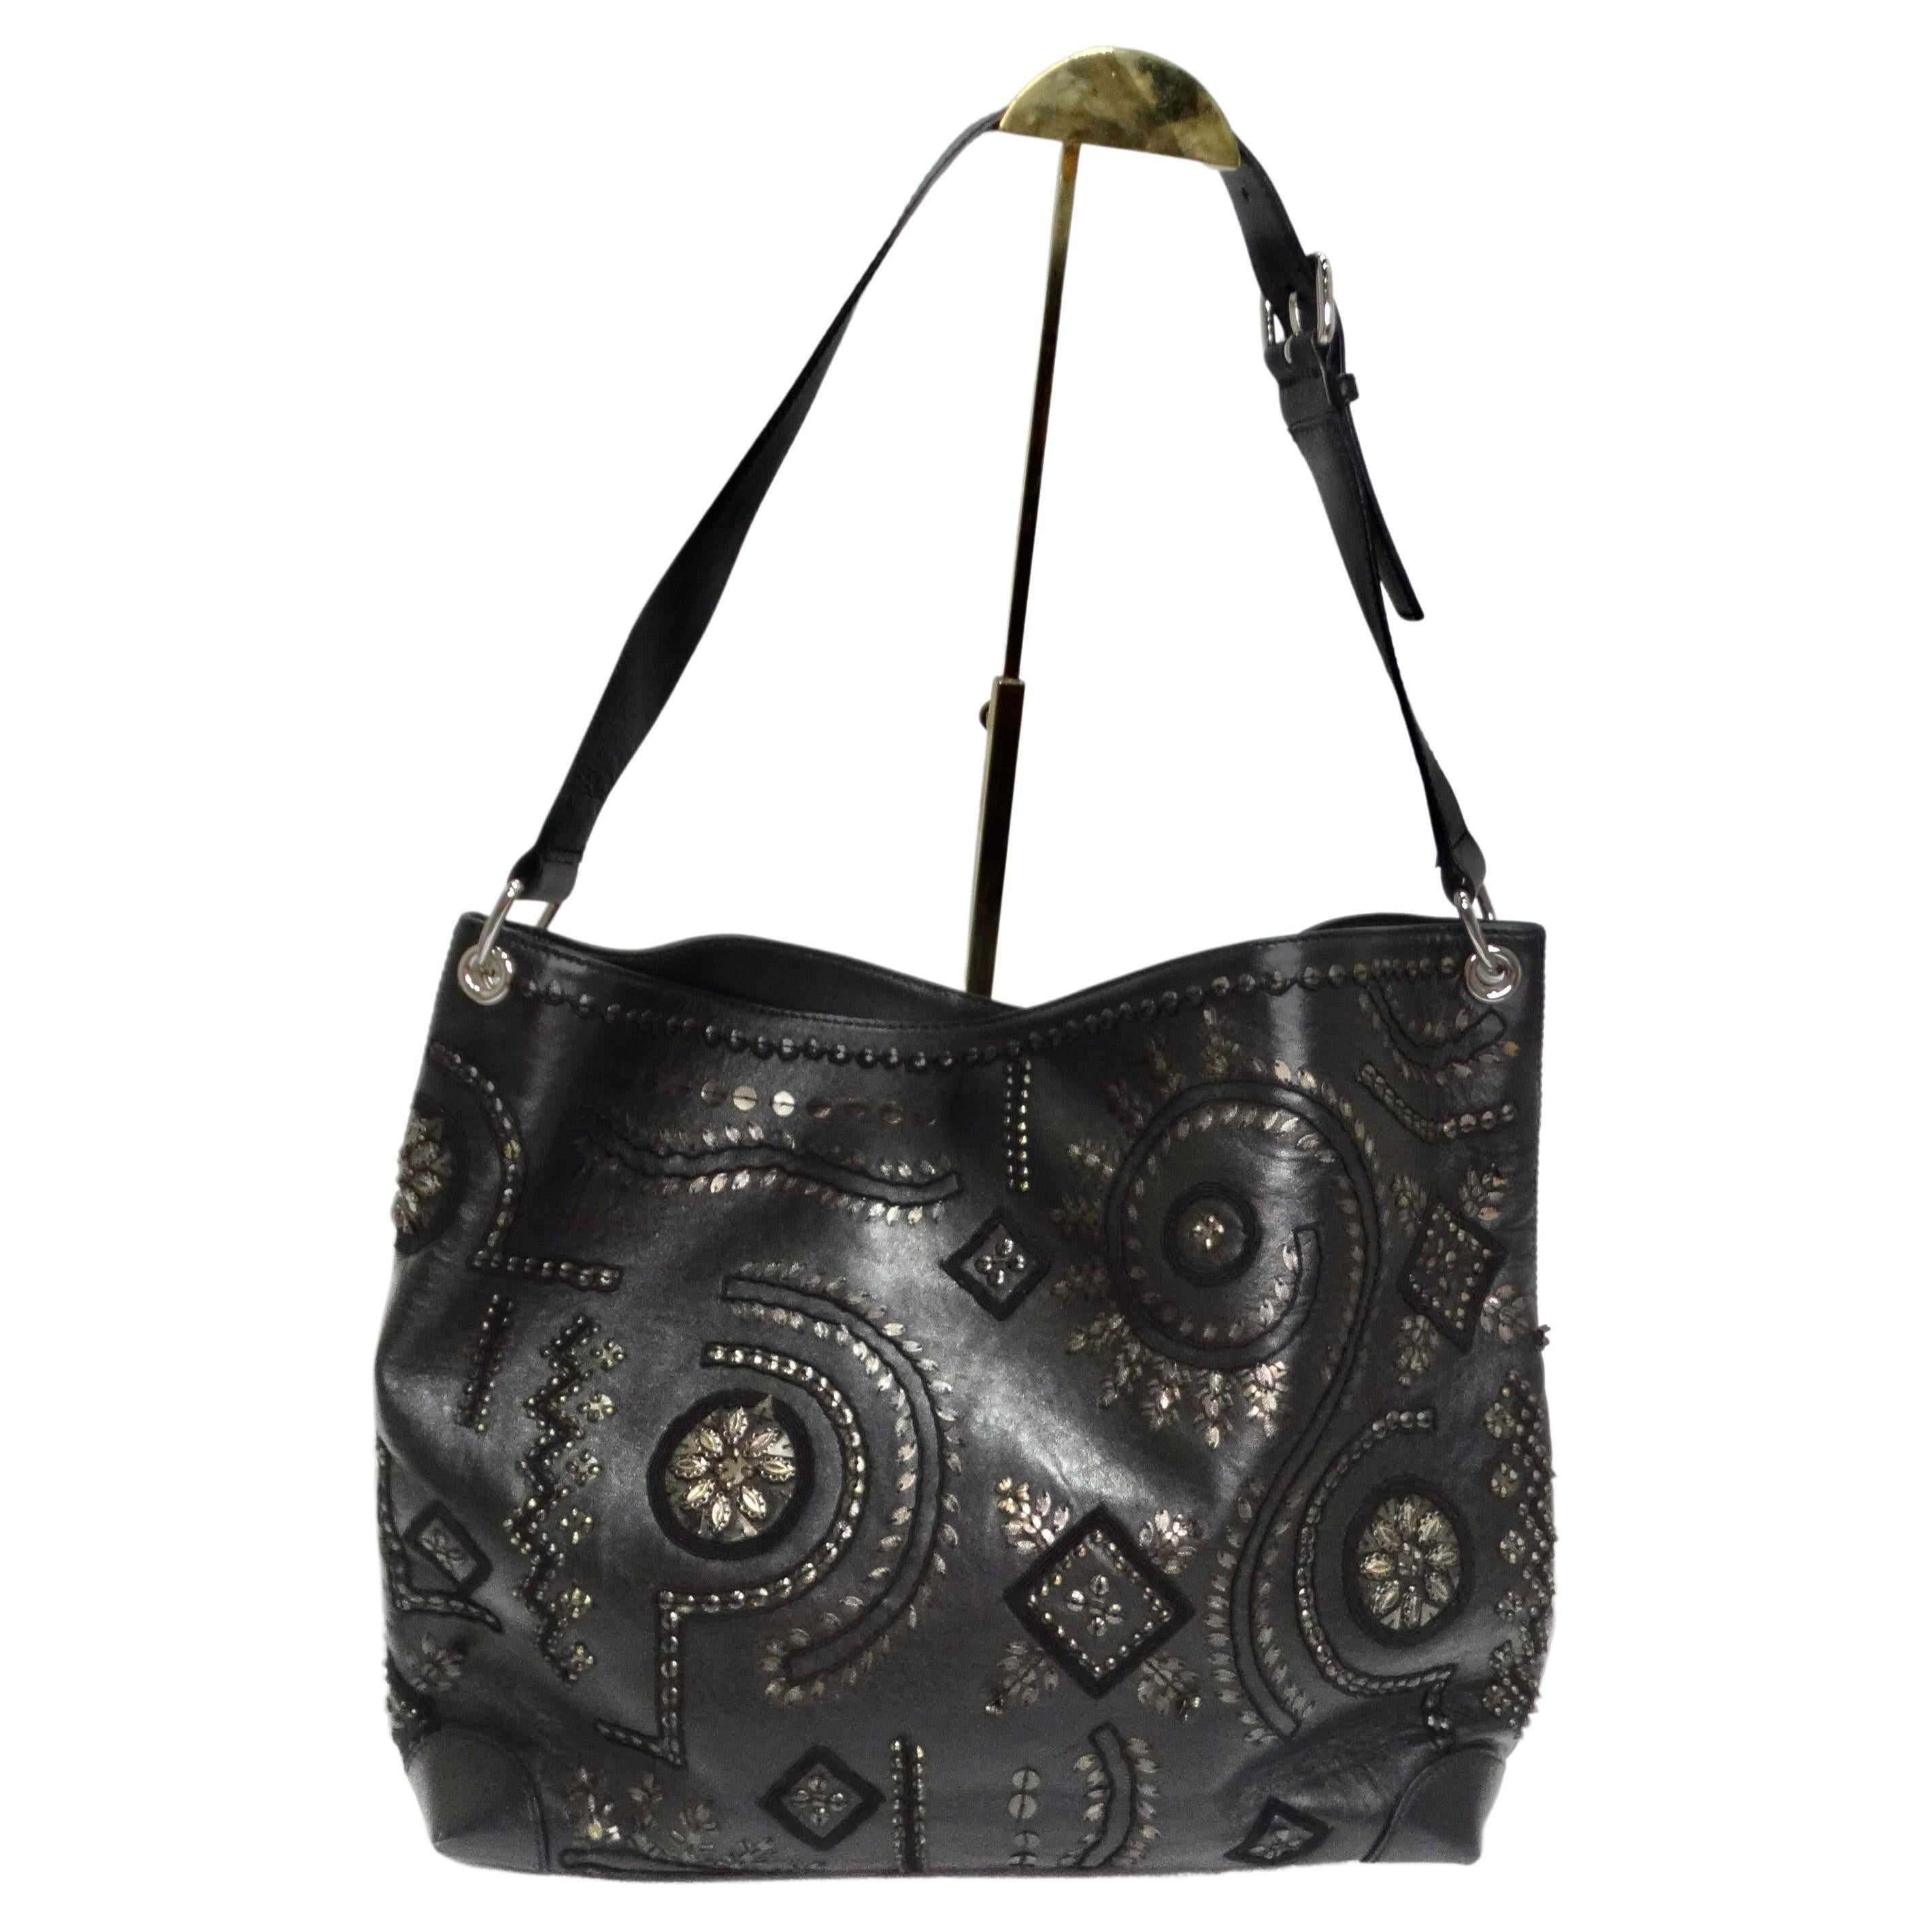 Louis Vuitton: The Perennial It Bag & Why I Love Them